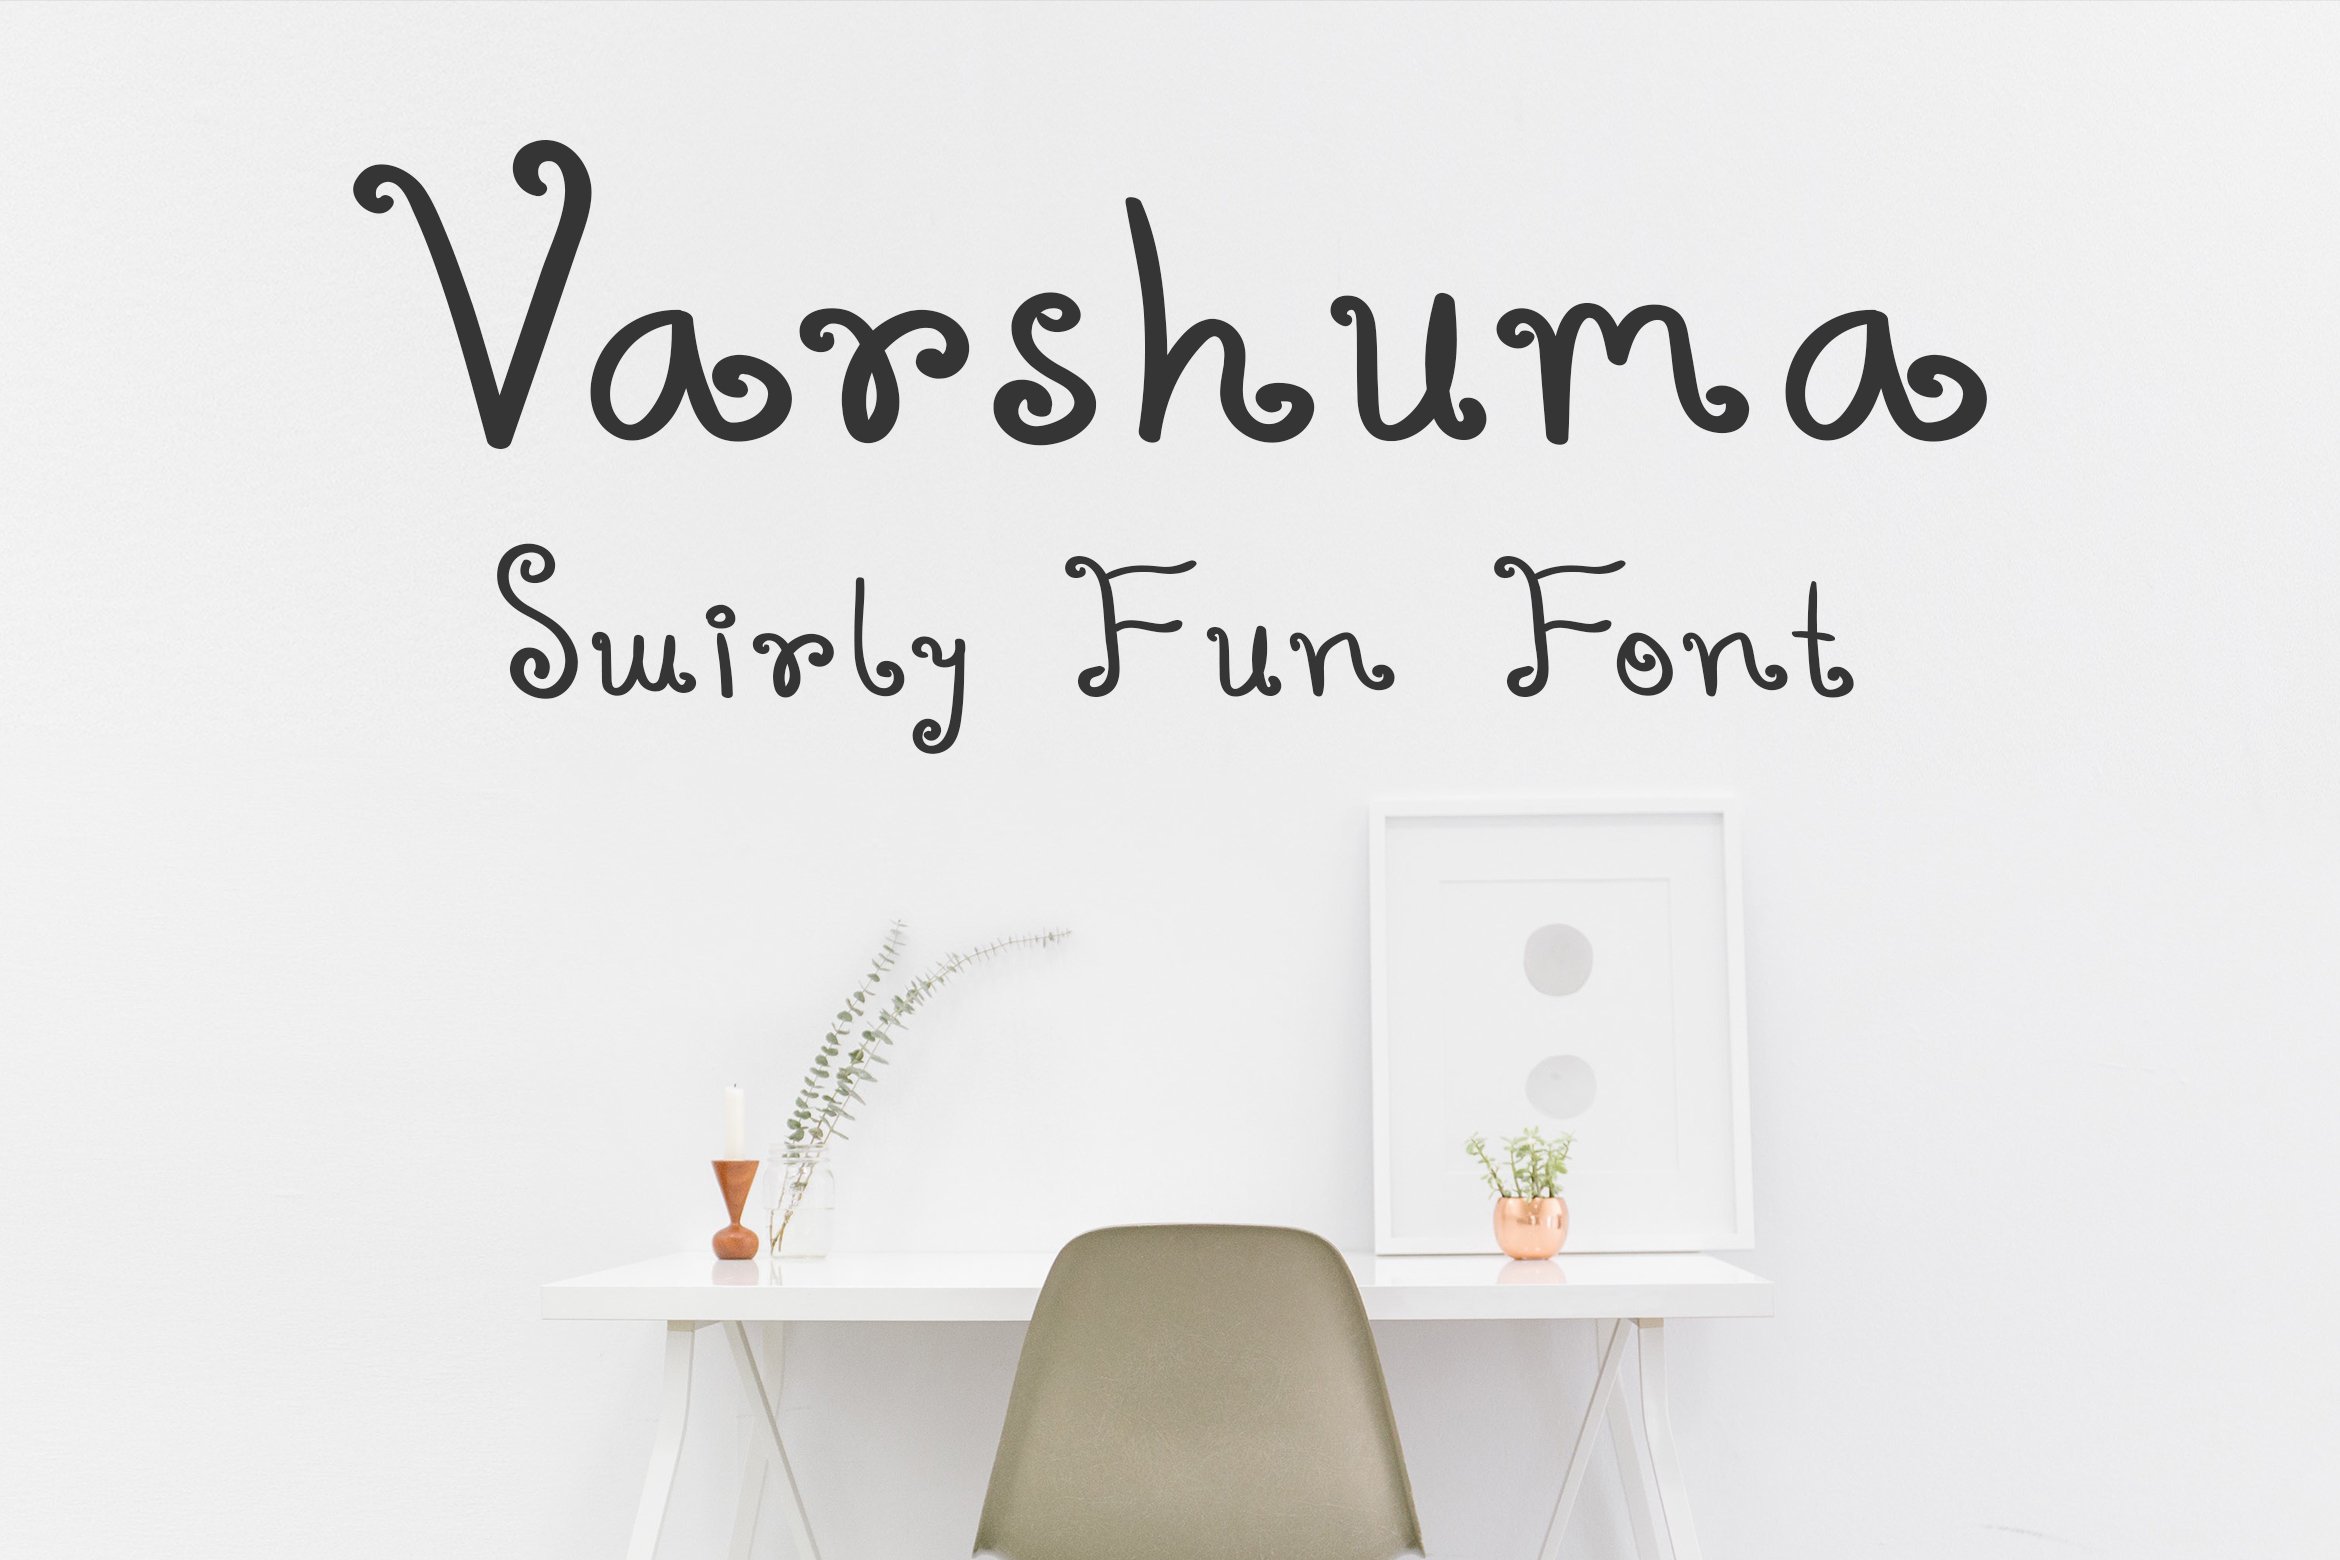 Varshuma - Swirly Fun Font cover image.